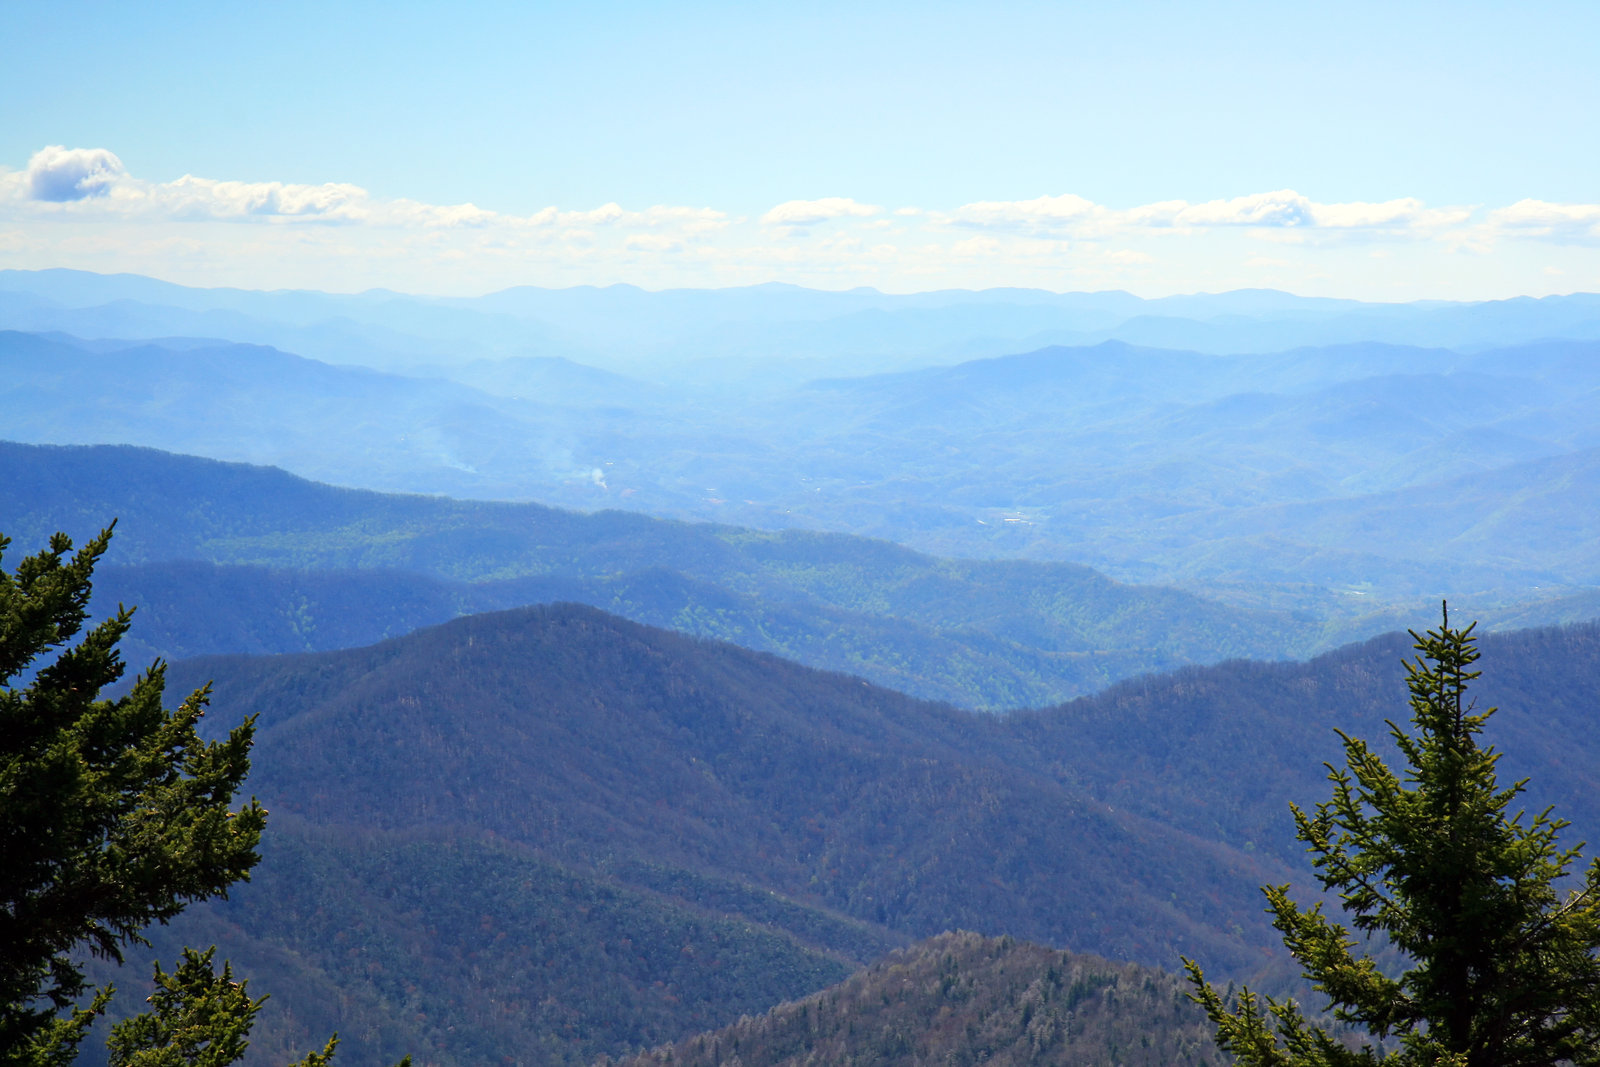 Smoky Mountain National Park